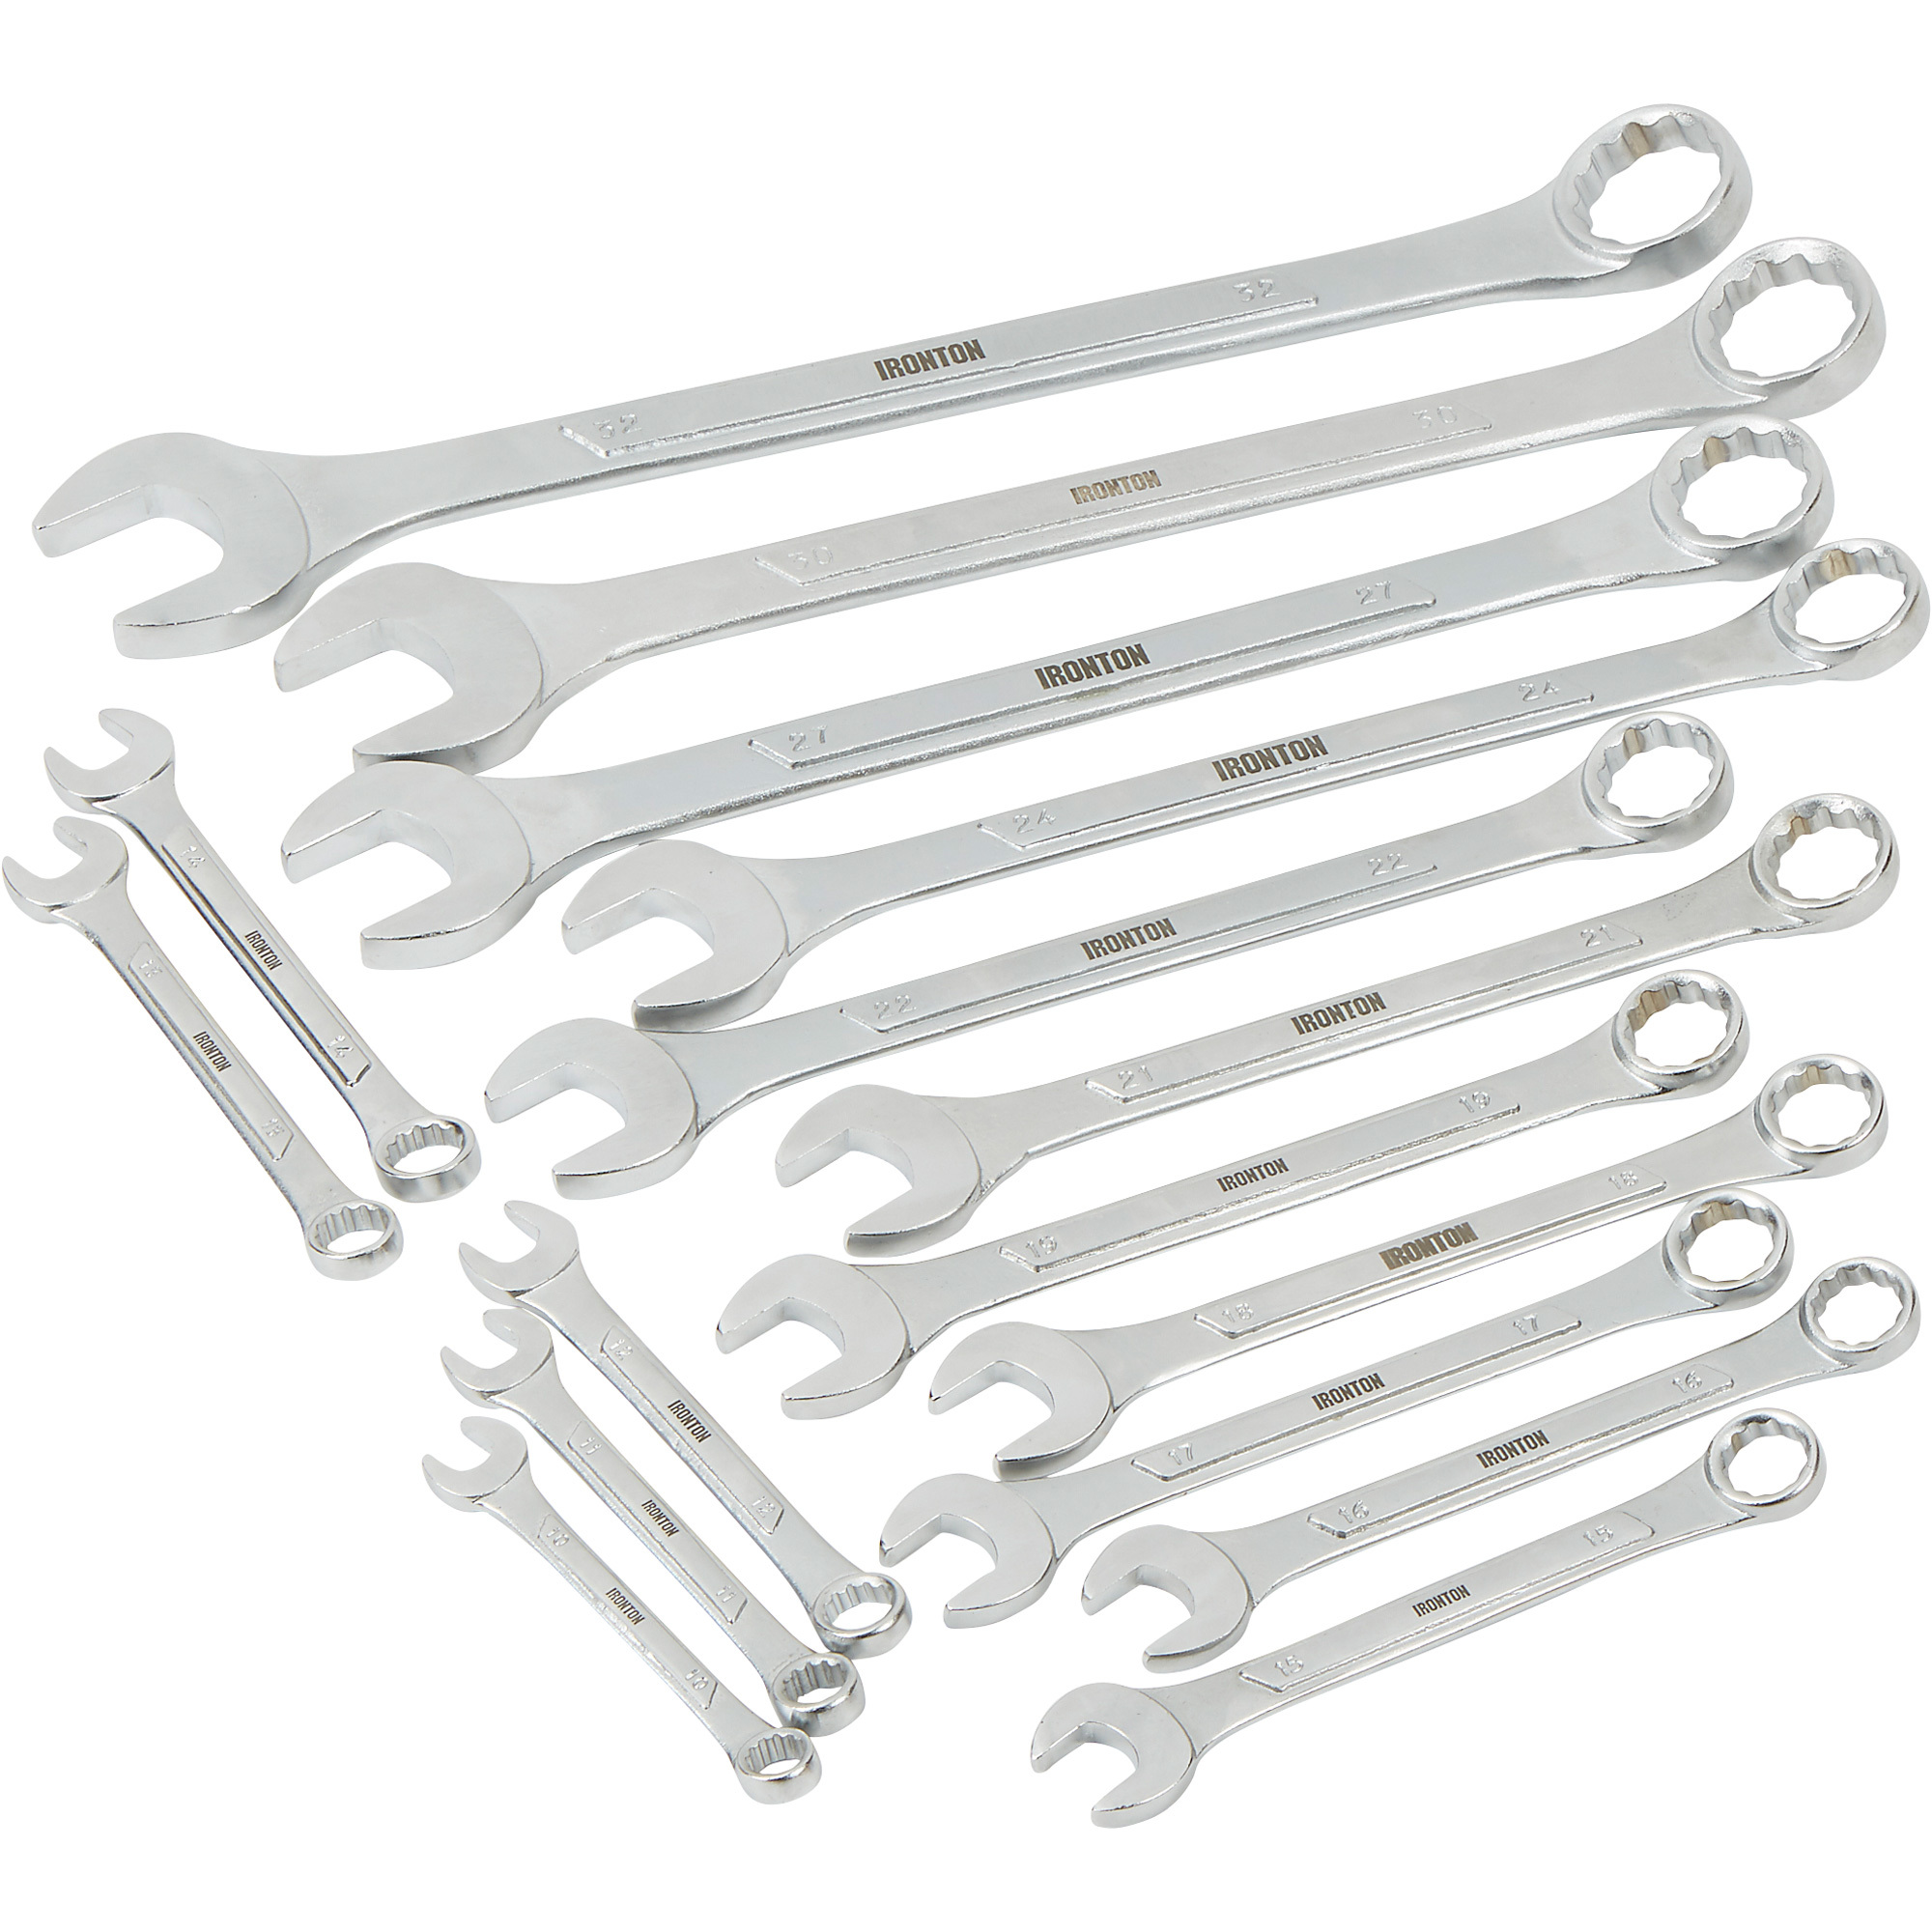 Ironton Combination Wrench Set â 16-Piece, Metric